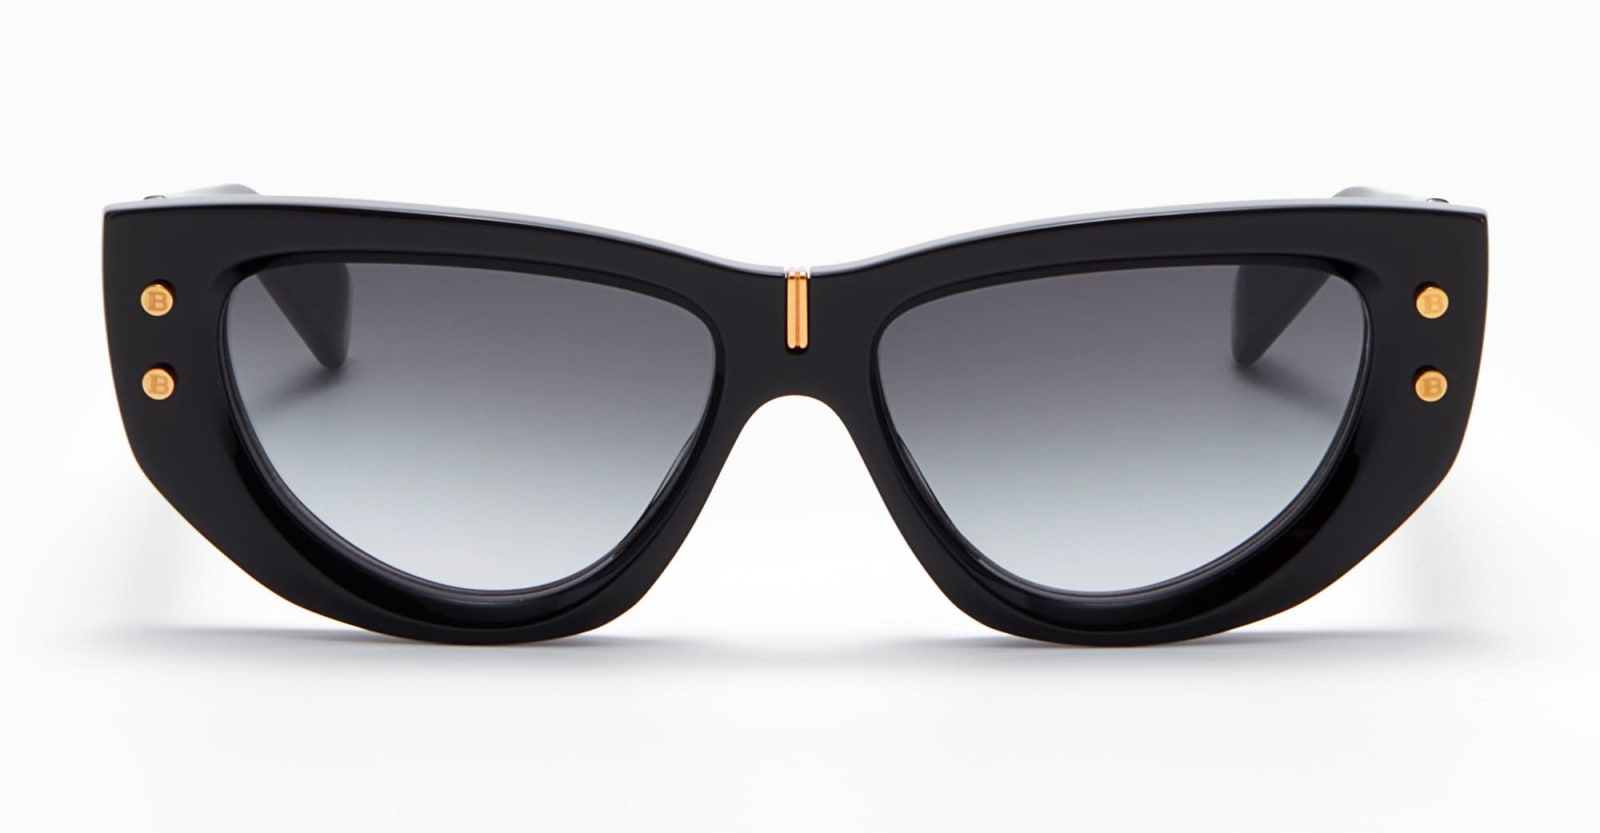 B-muse - Black / Gold Sunglasses